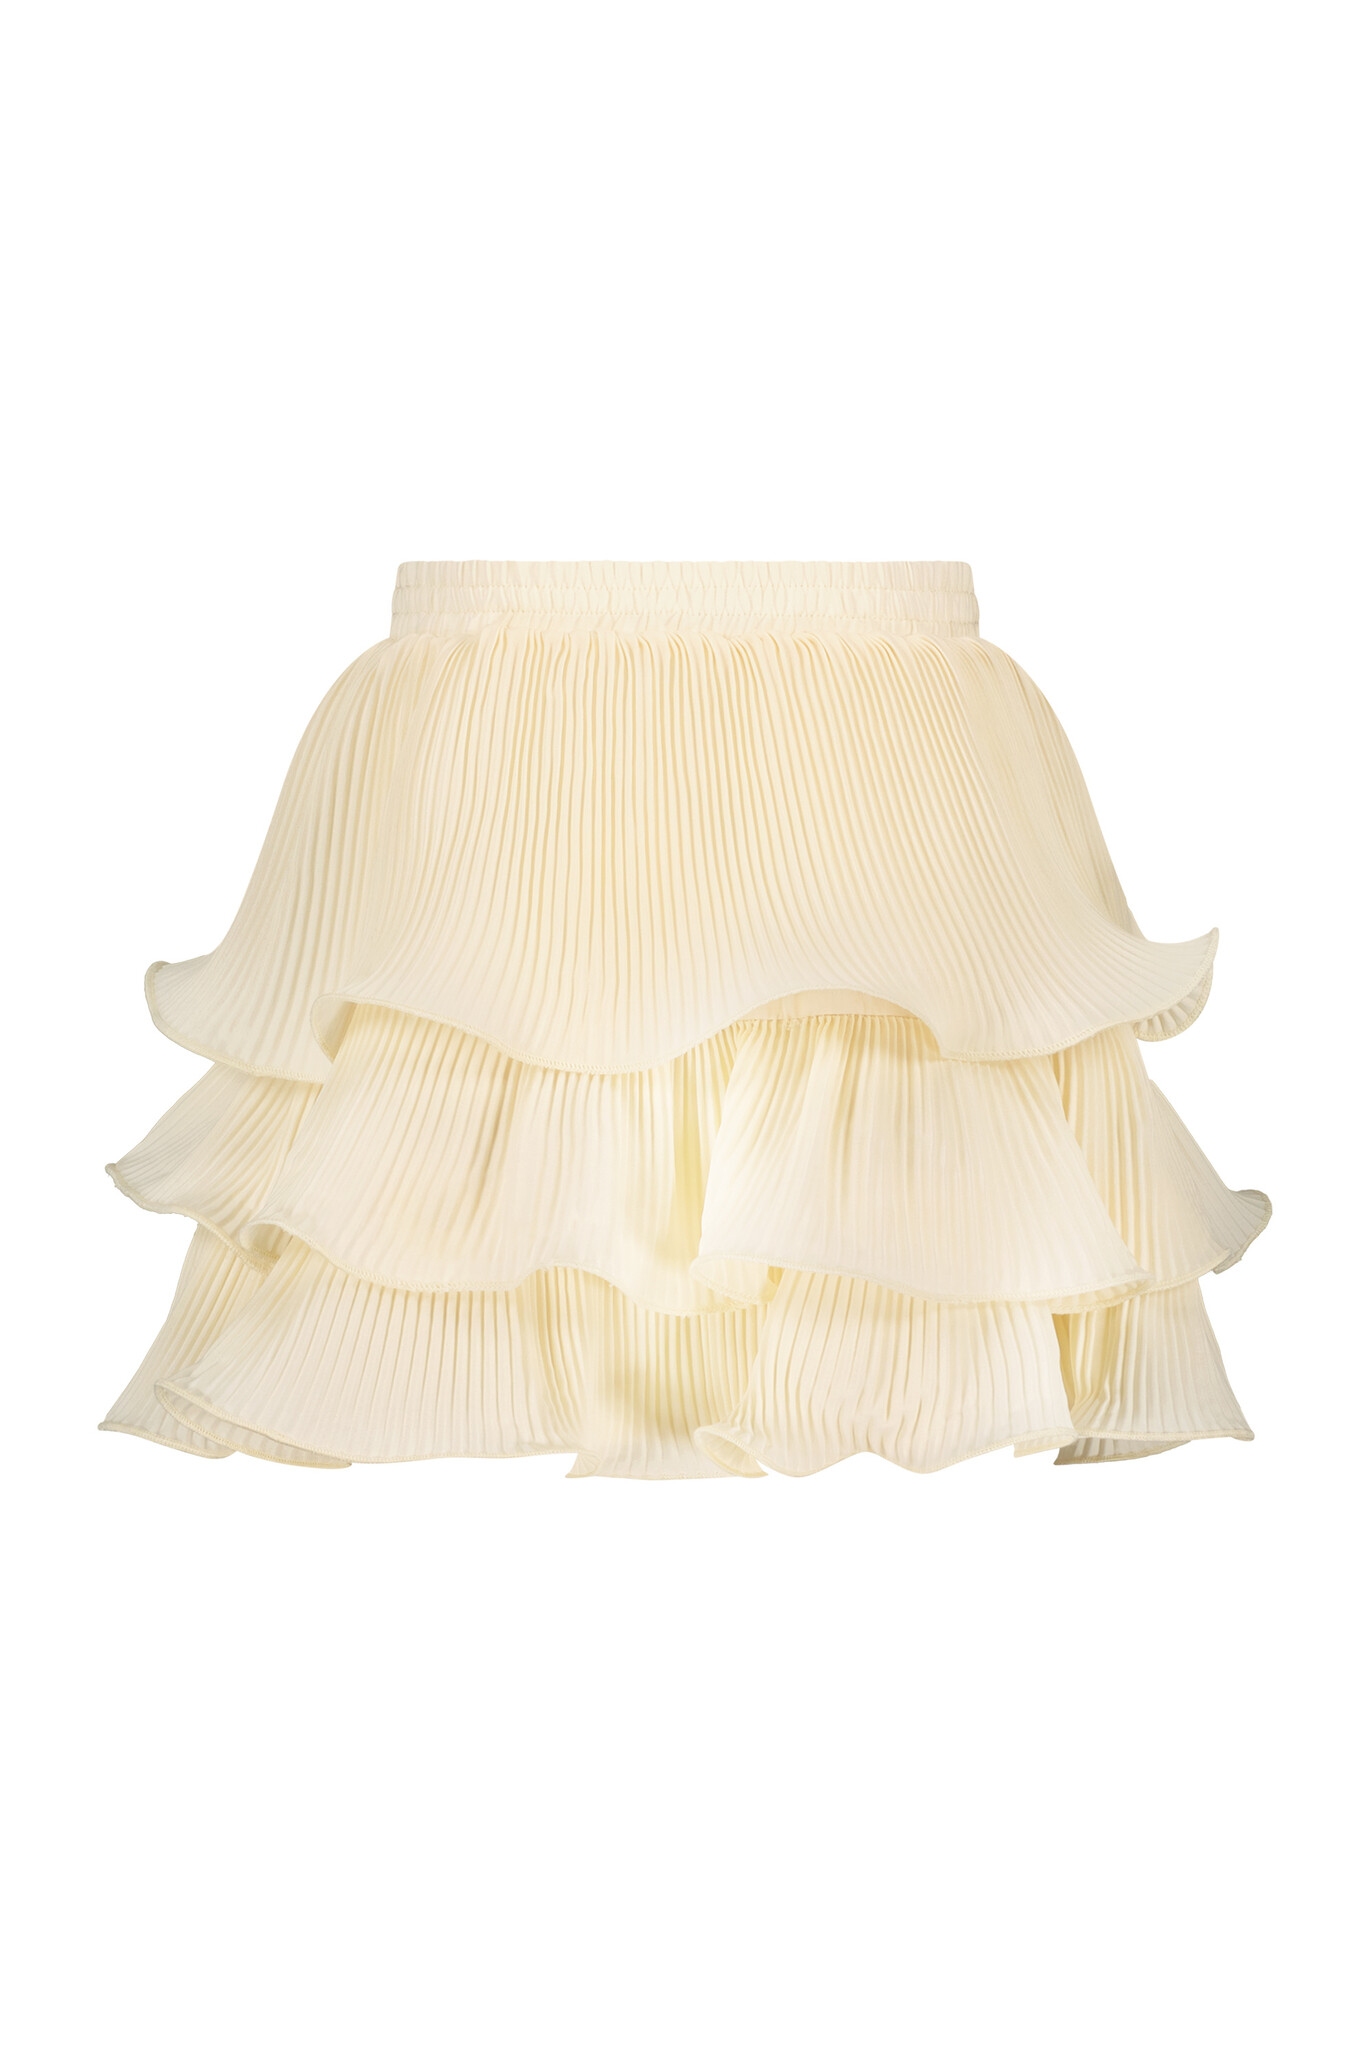 Tesra Plisse Skirt - Pearled Ivory